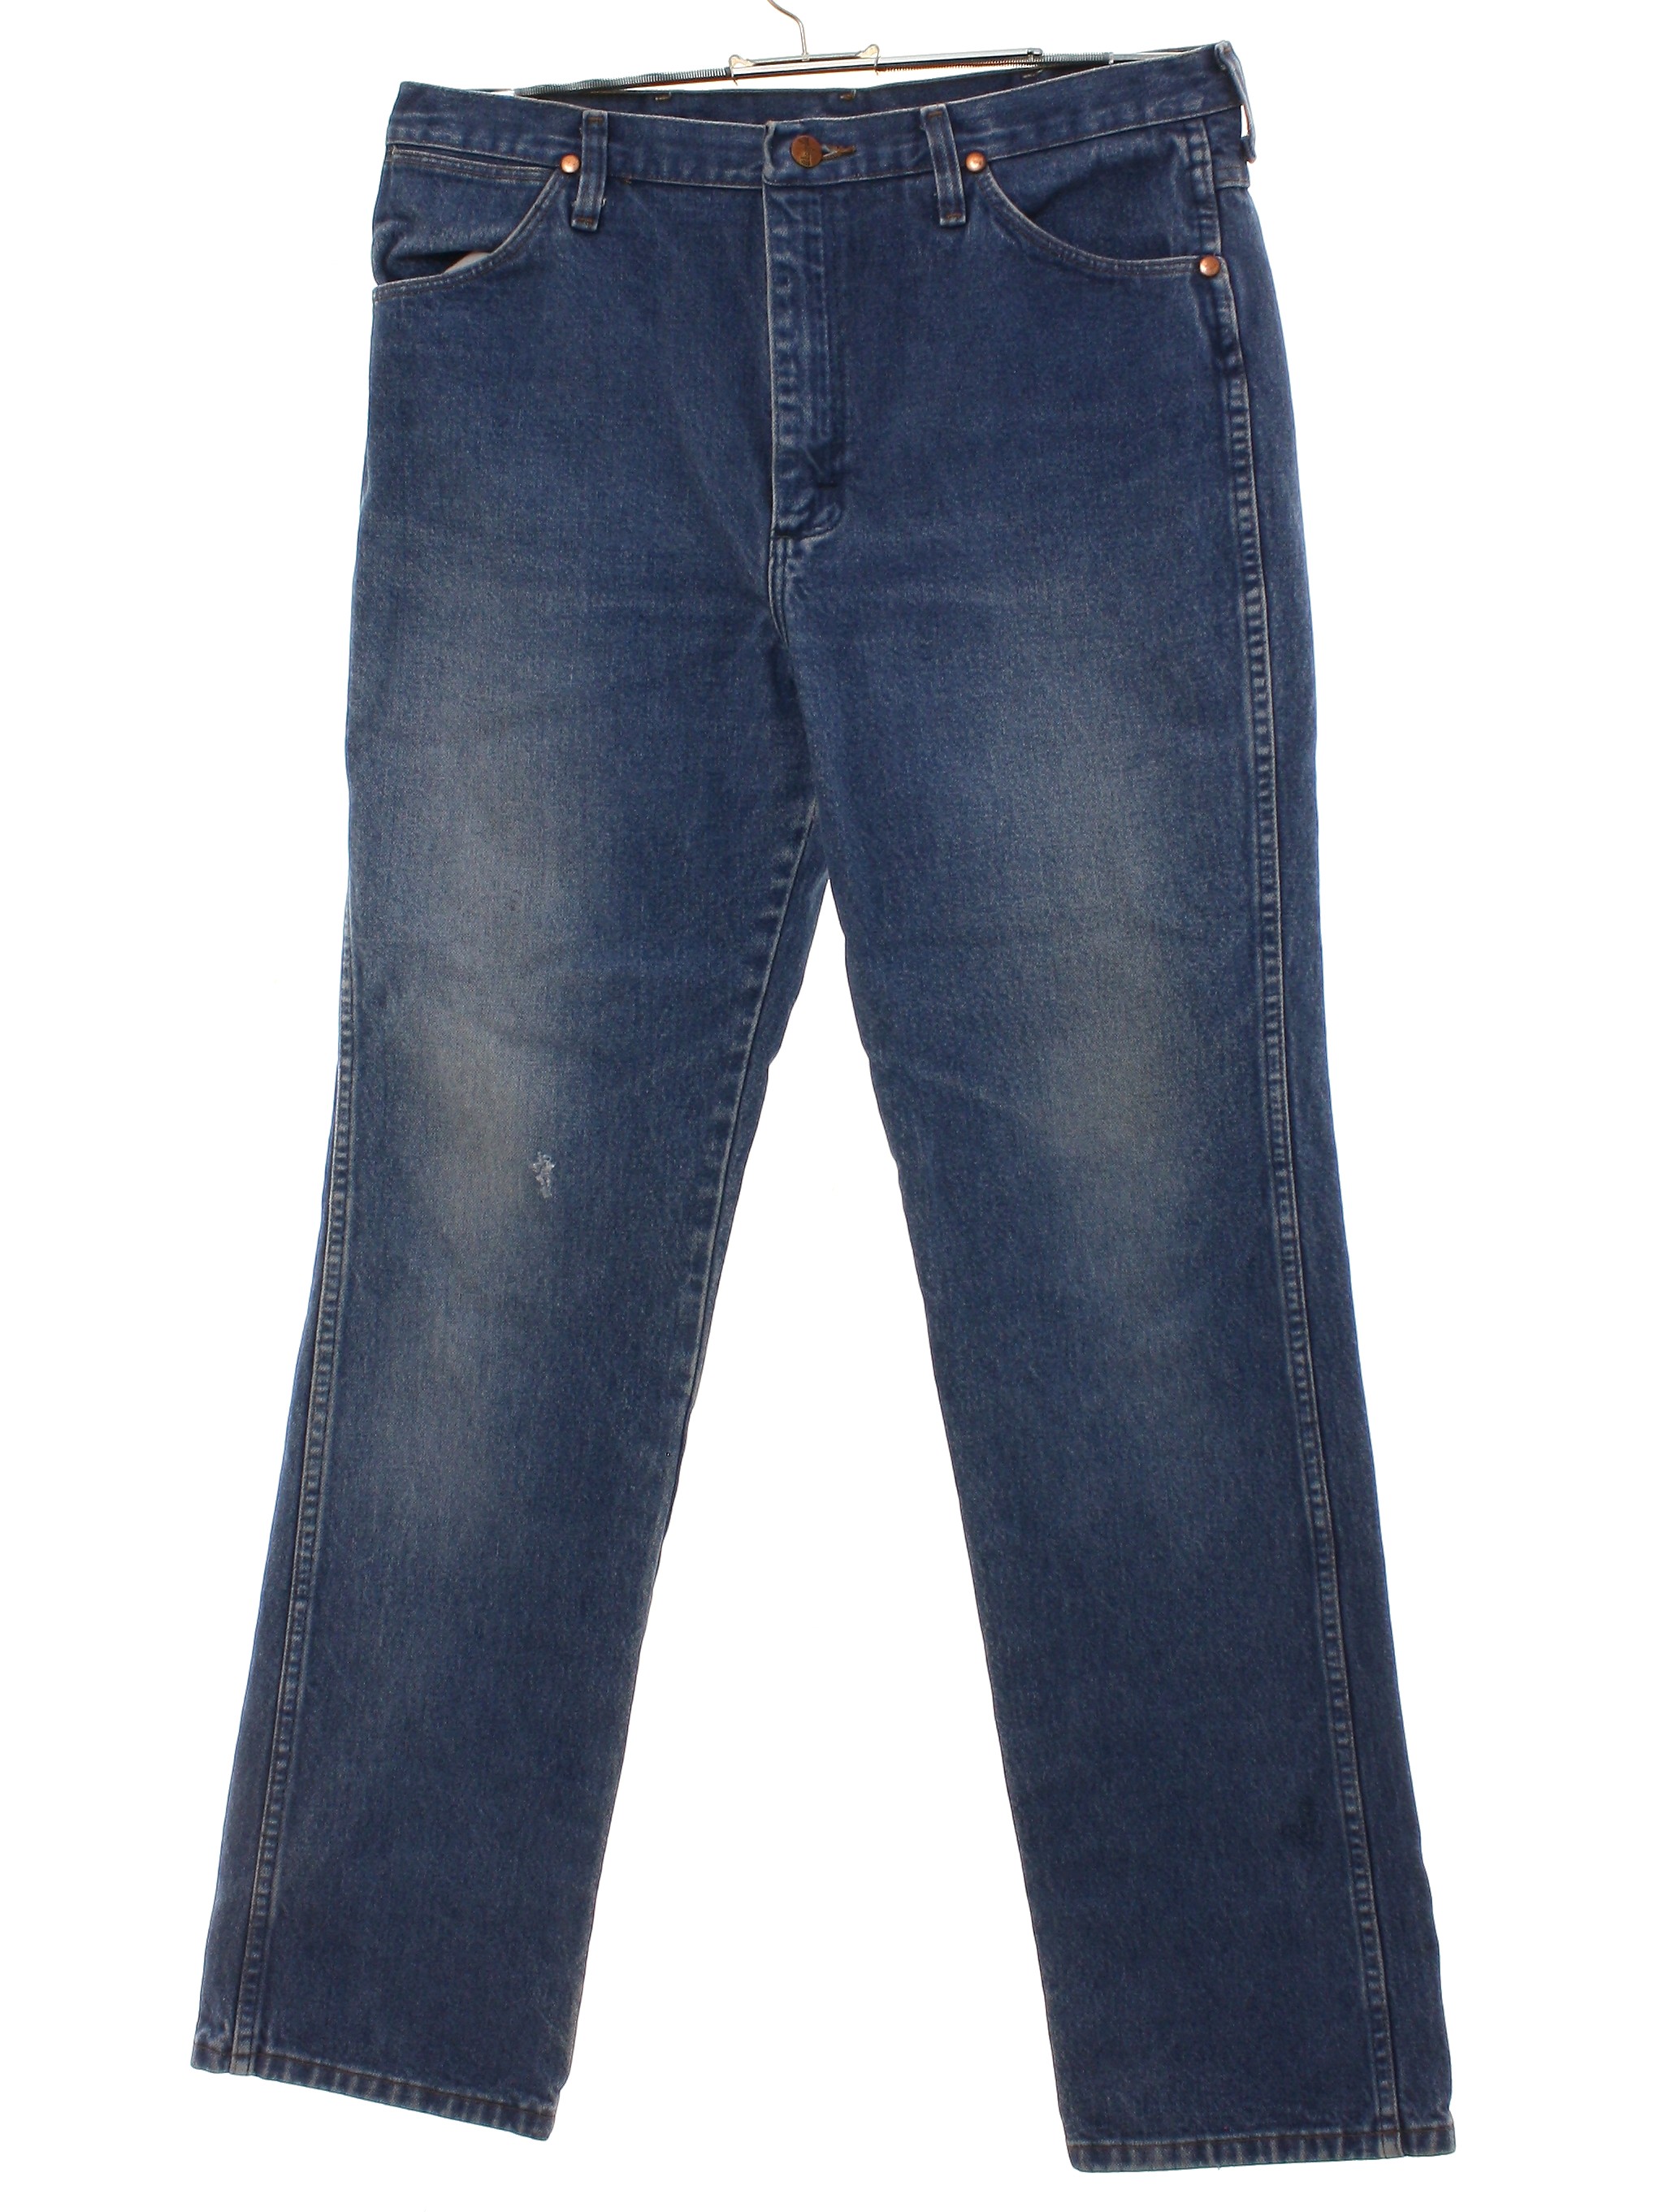 Retro 90's Pants: Late 90s -Wrangler, Made in Mexico- Mens medium blue ...